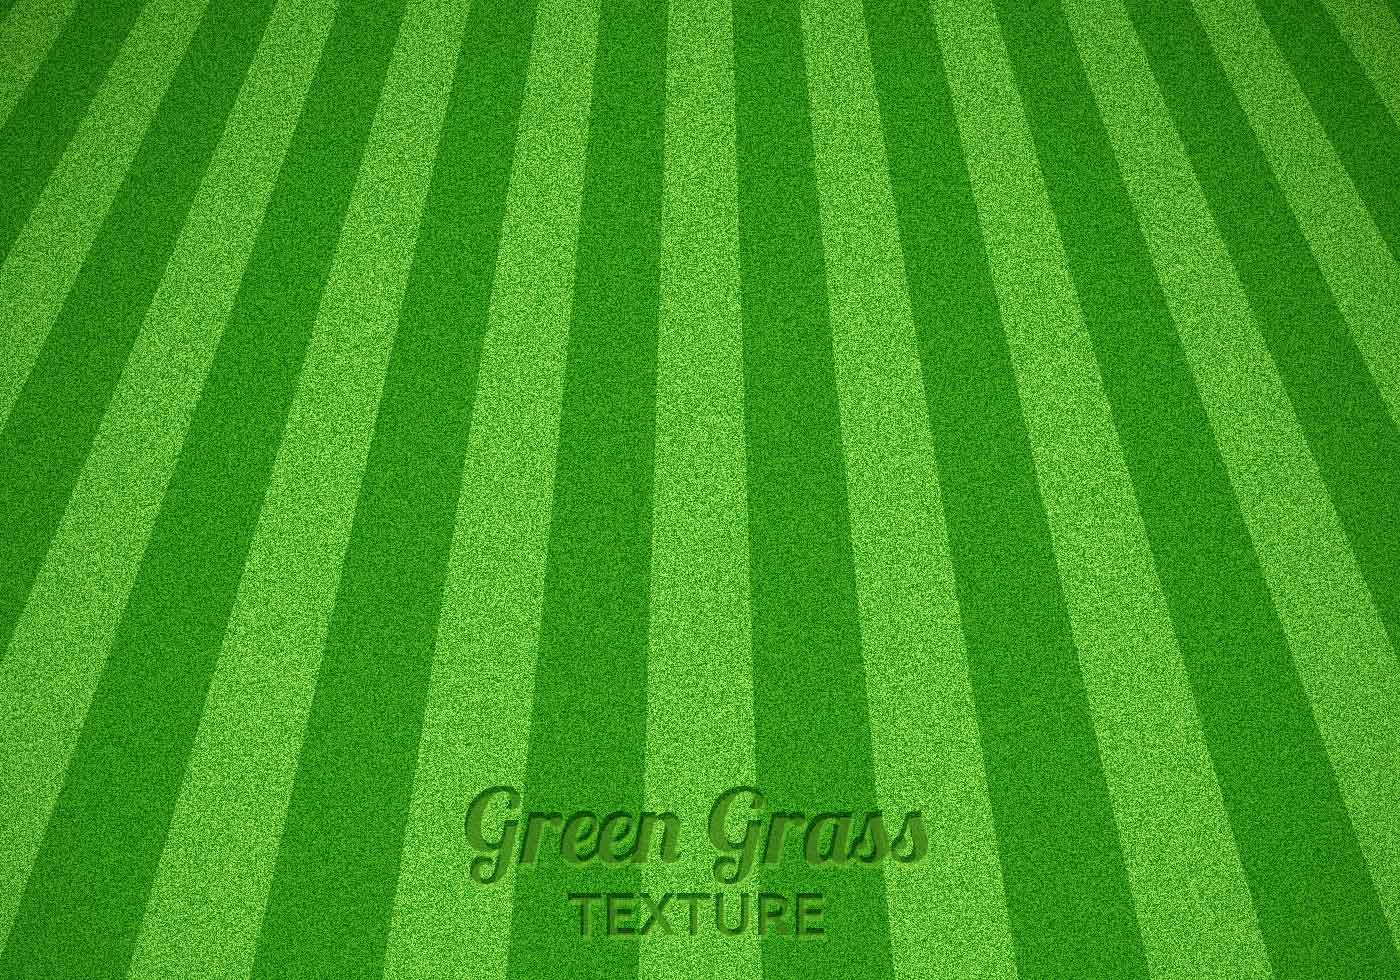 Mowed Green Grass Vector Texture 60348 Vector Art at Vecteezy